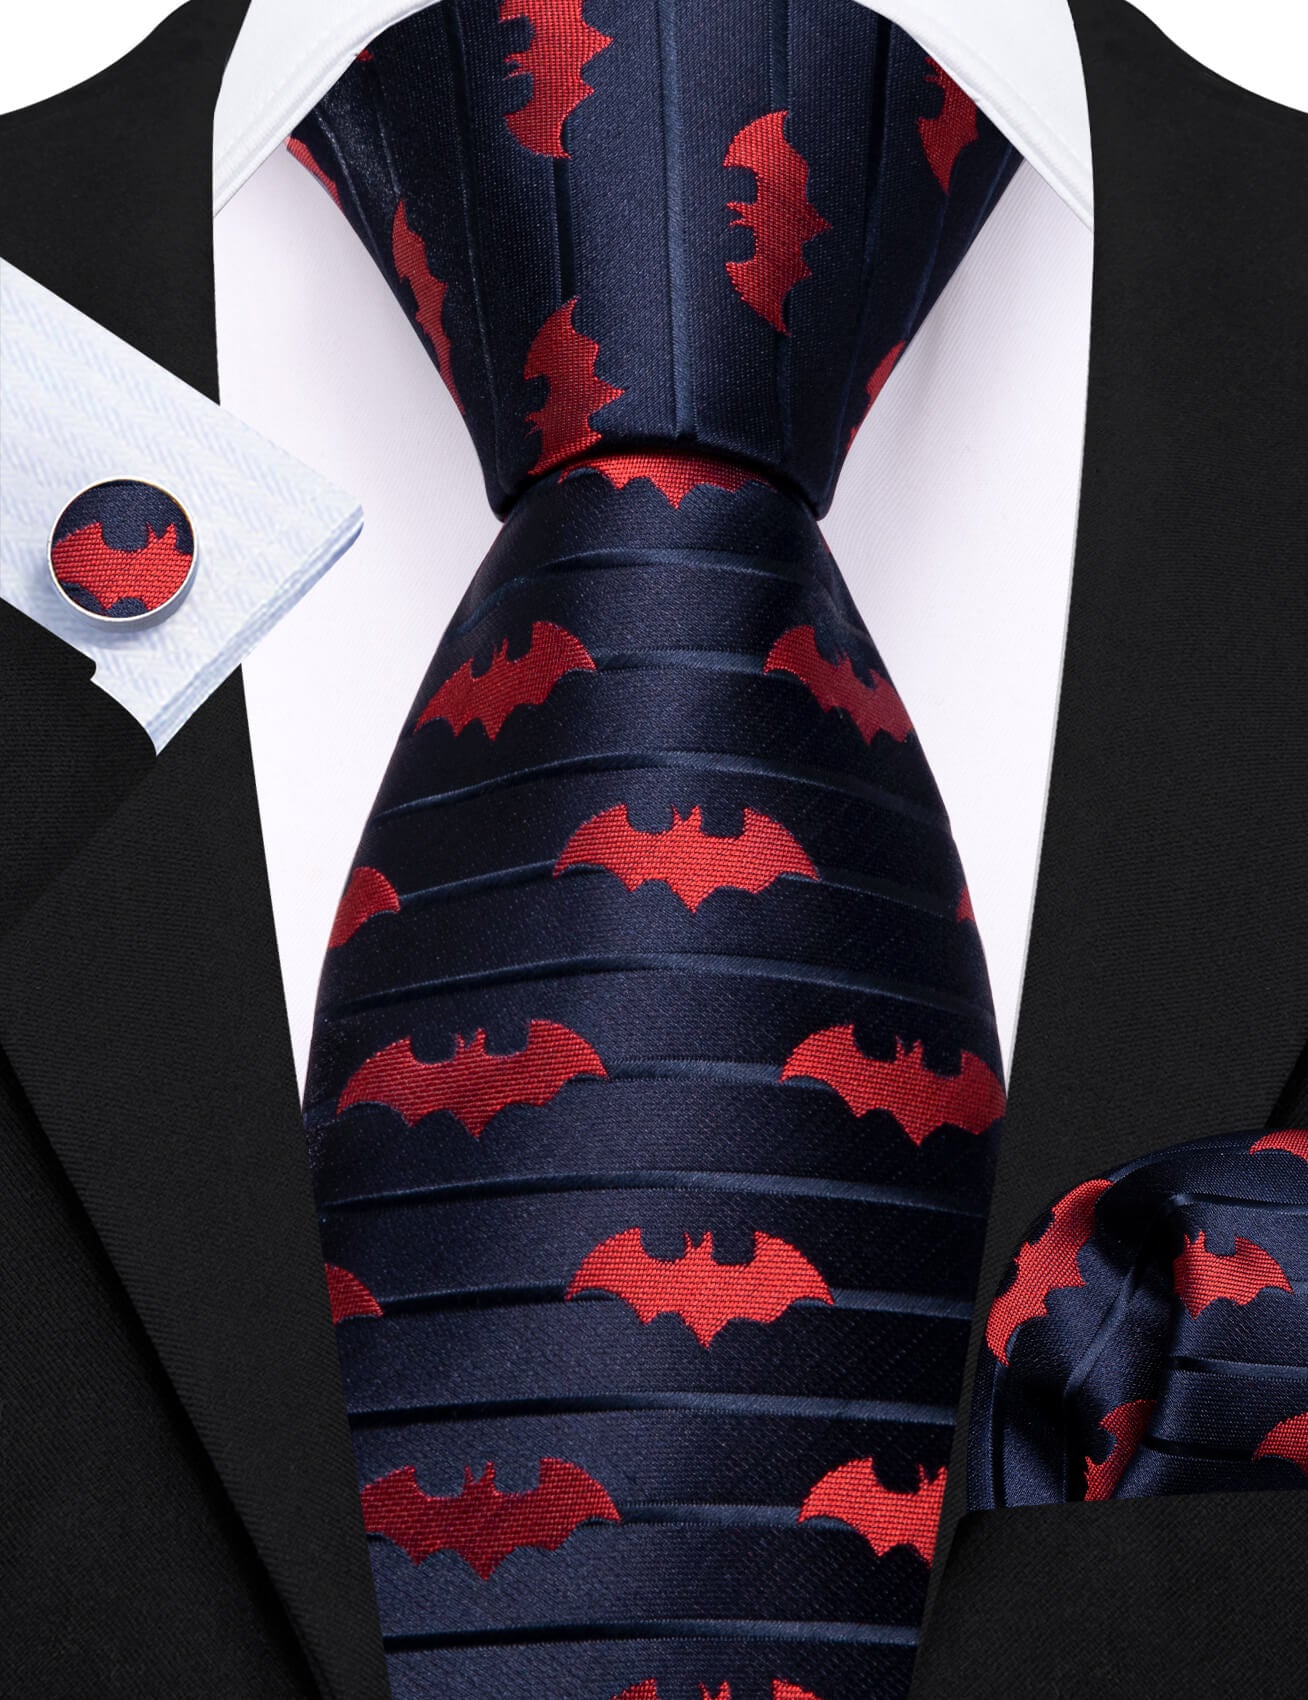 Barry.wang Blue Tie Navy Red Jacquard Woven Bat Men's Silk Tie Set Top Quality